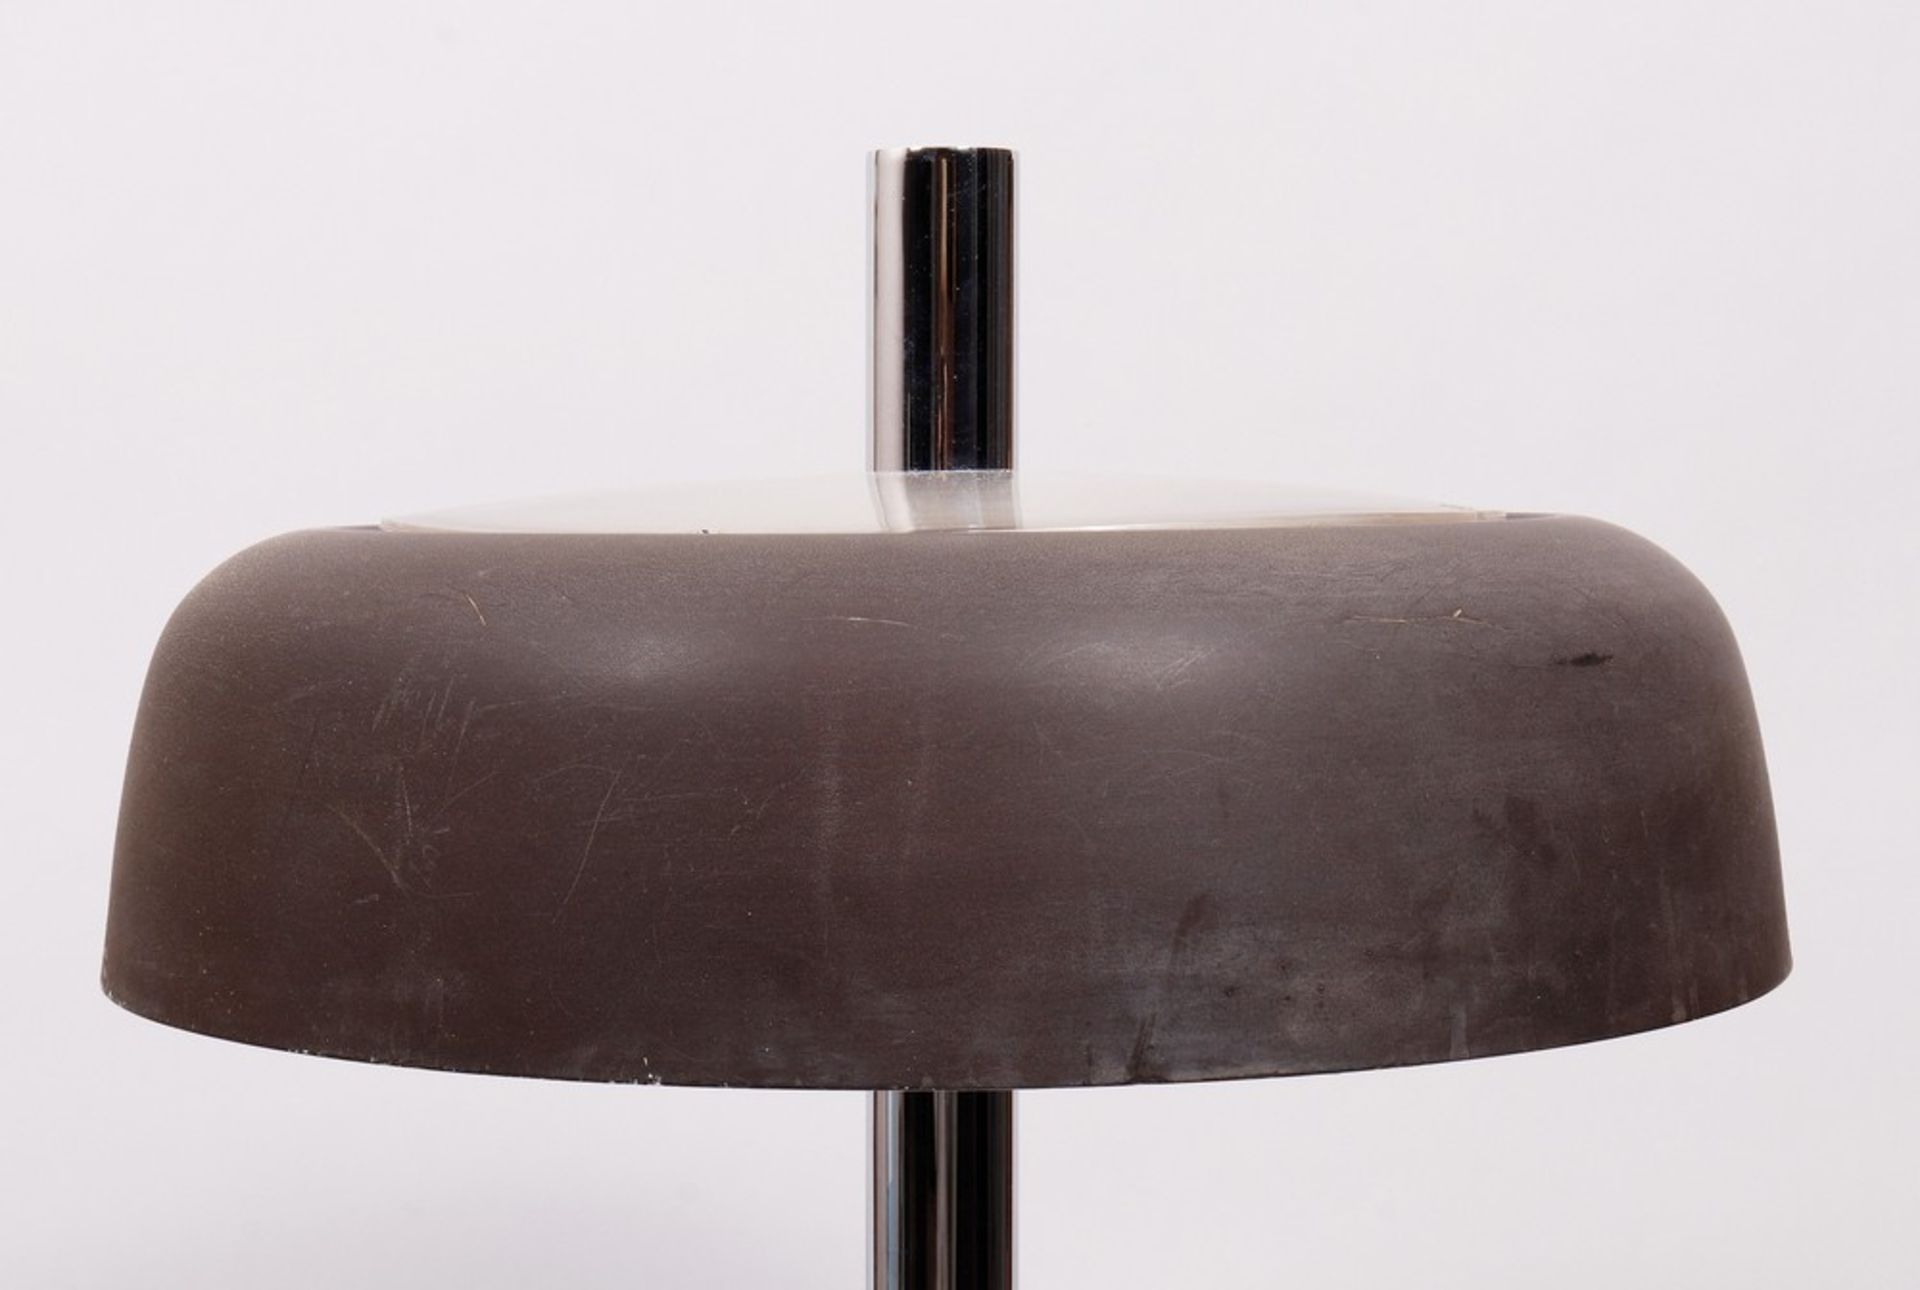 Table lamp, Egon Hillebrand for Hillebrand Lighting, c. 1970 - Image 2 of 3